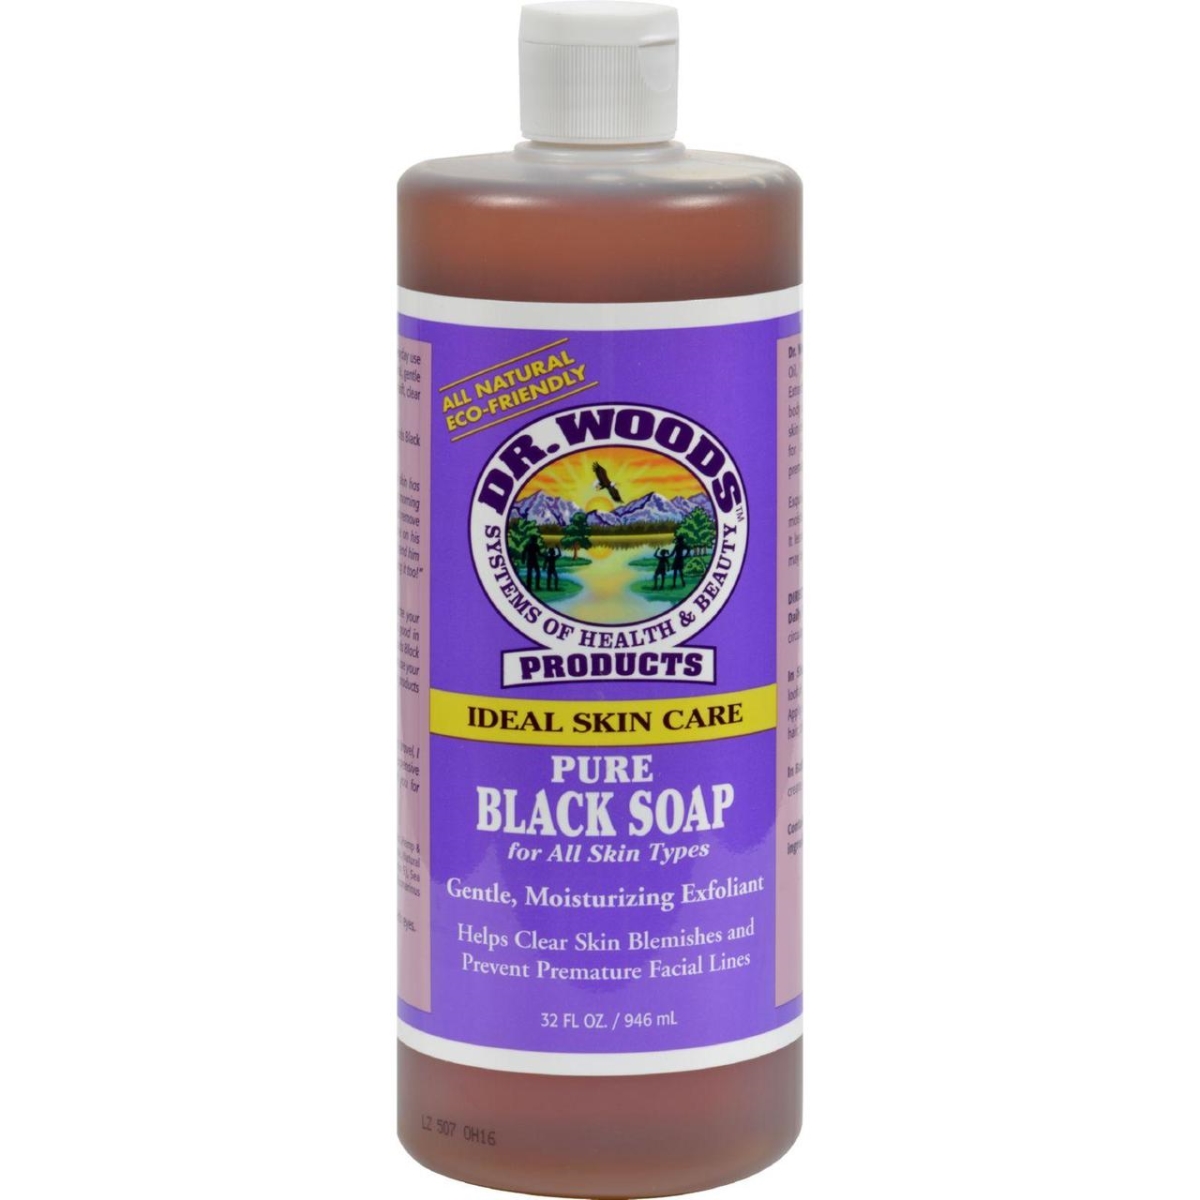 Hg0771972 32 Fl Oz Pure Black Soap